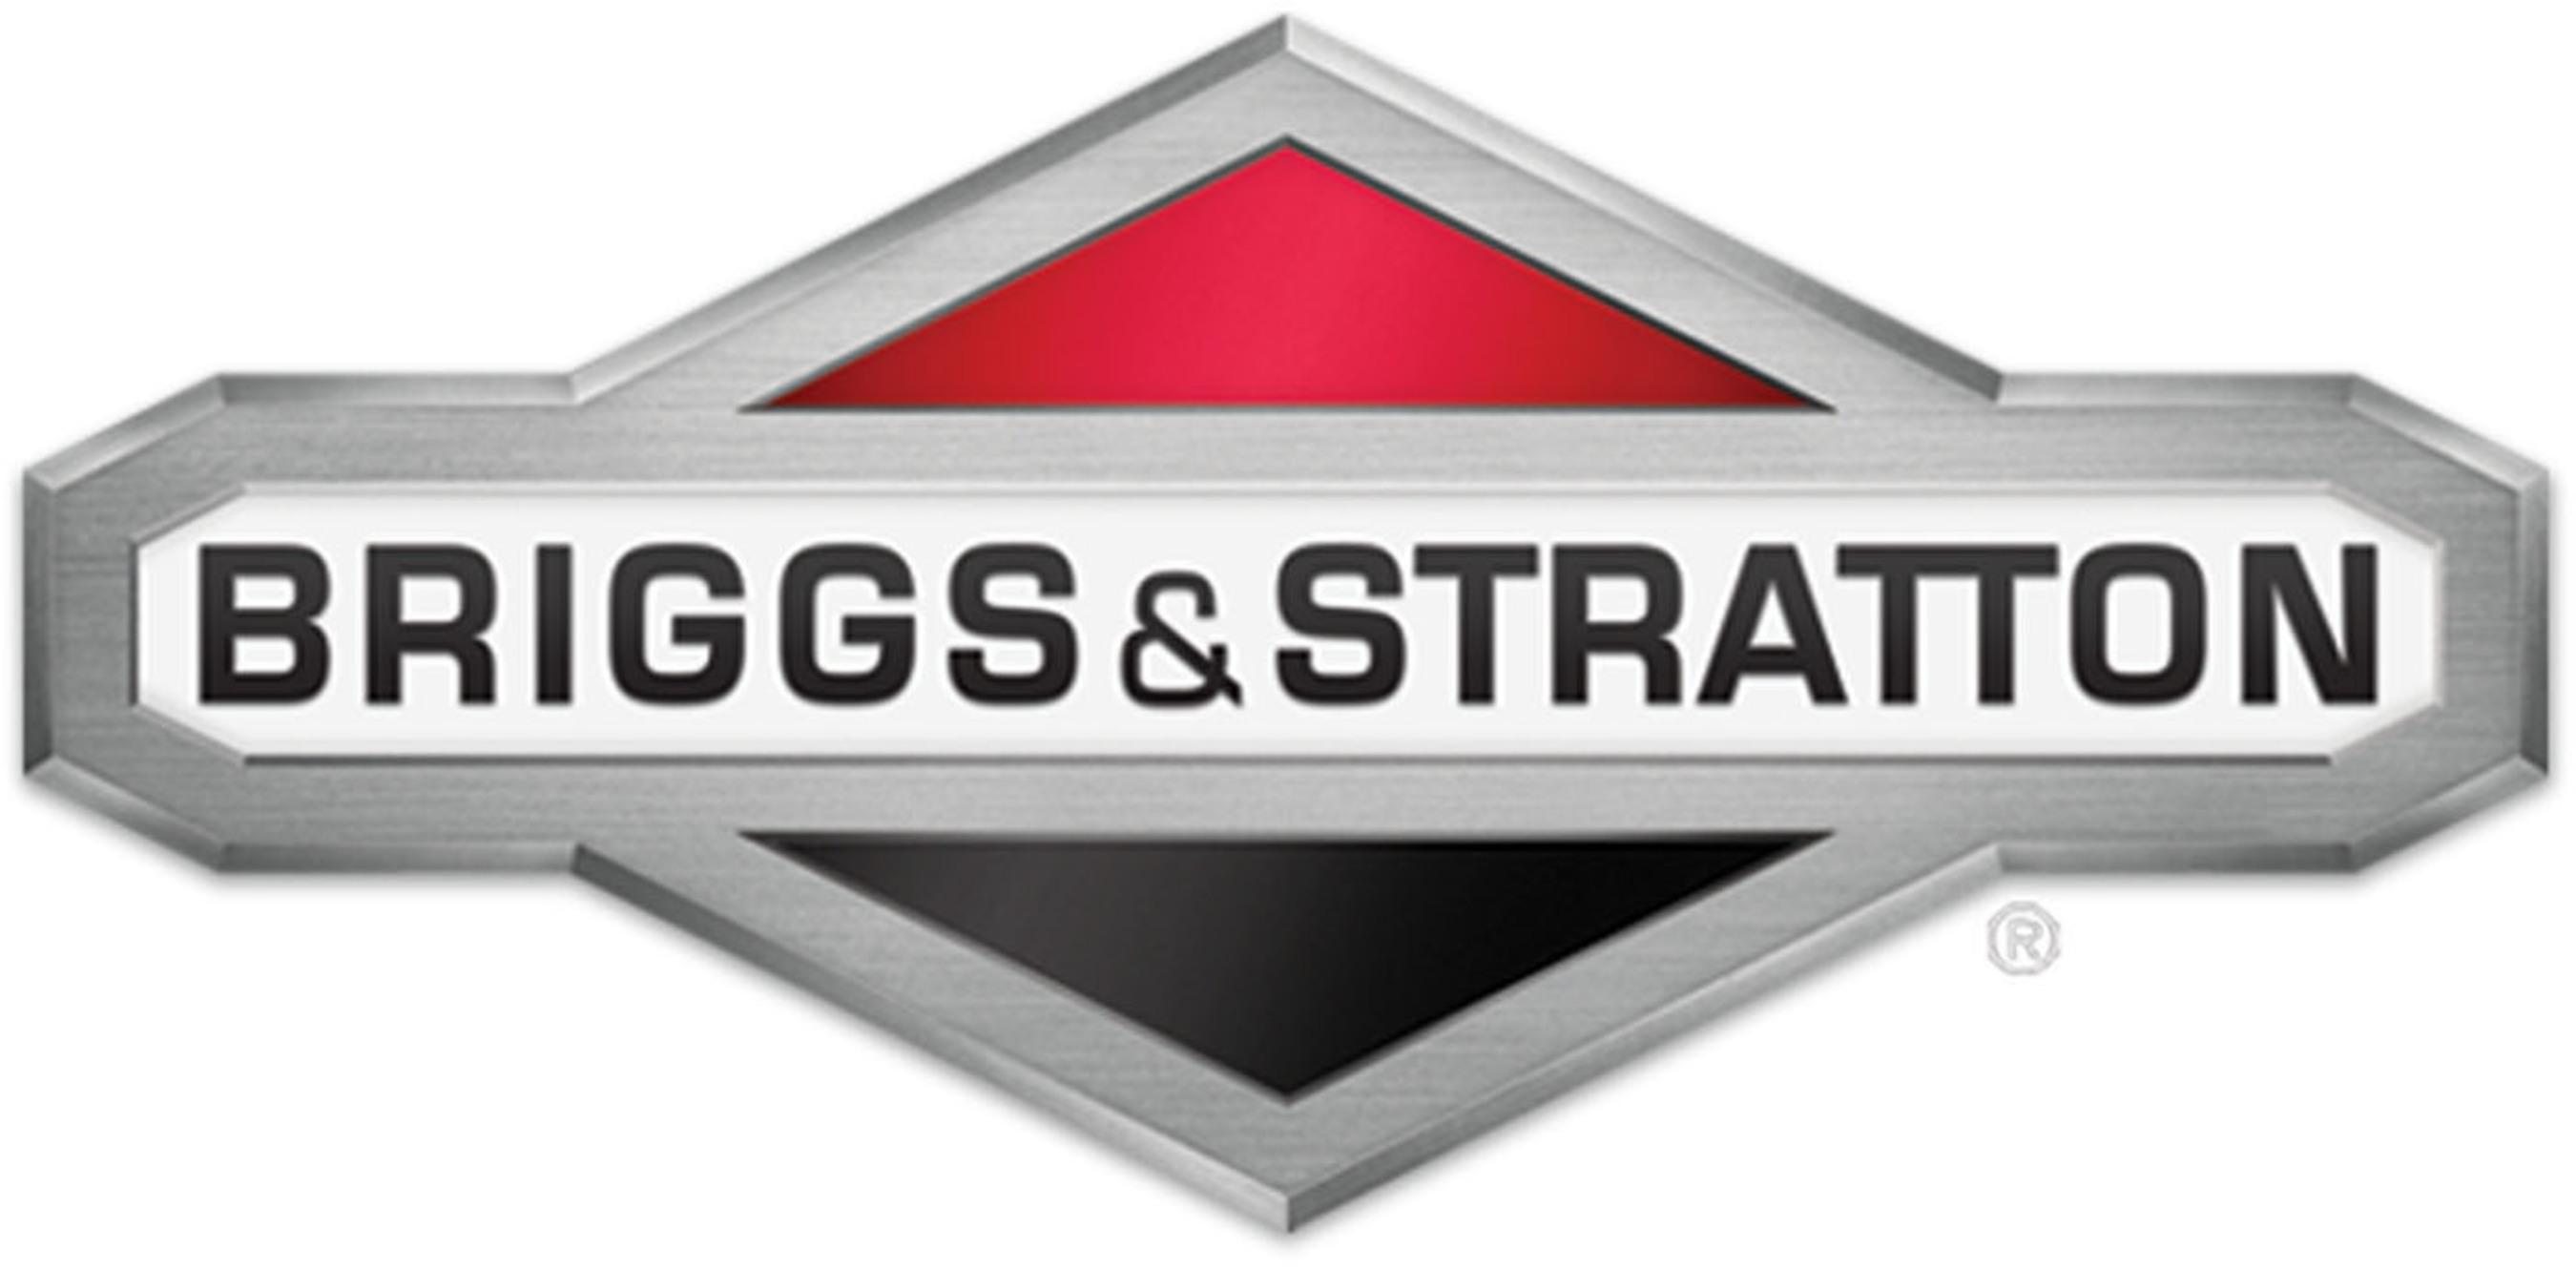 Briggs & Stratton Corporation logo. (PRNewsFoto/Briggs & Stratton Corporation) (PRNewsFoto/)